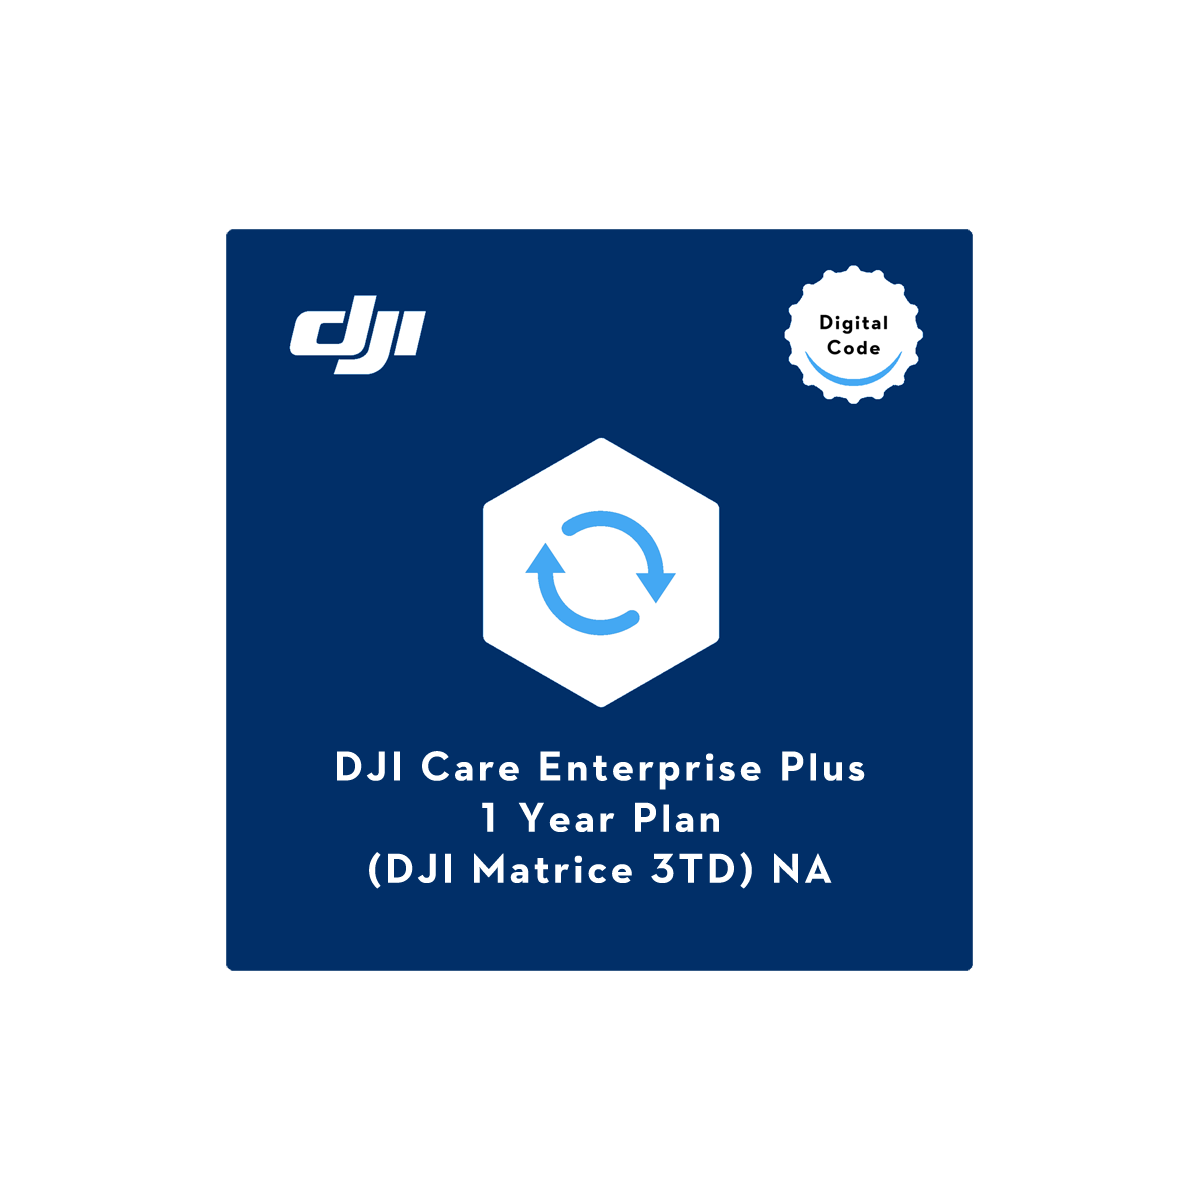 DJI Care Enterprise Basic (DJI Matrice 3TD) NA